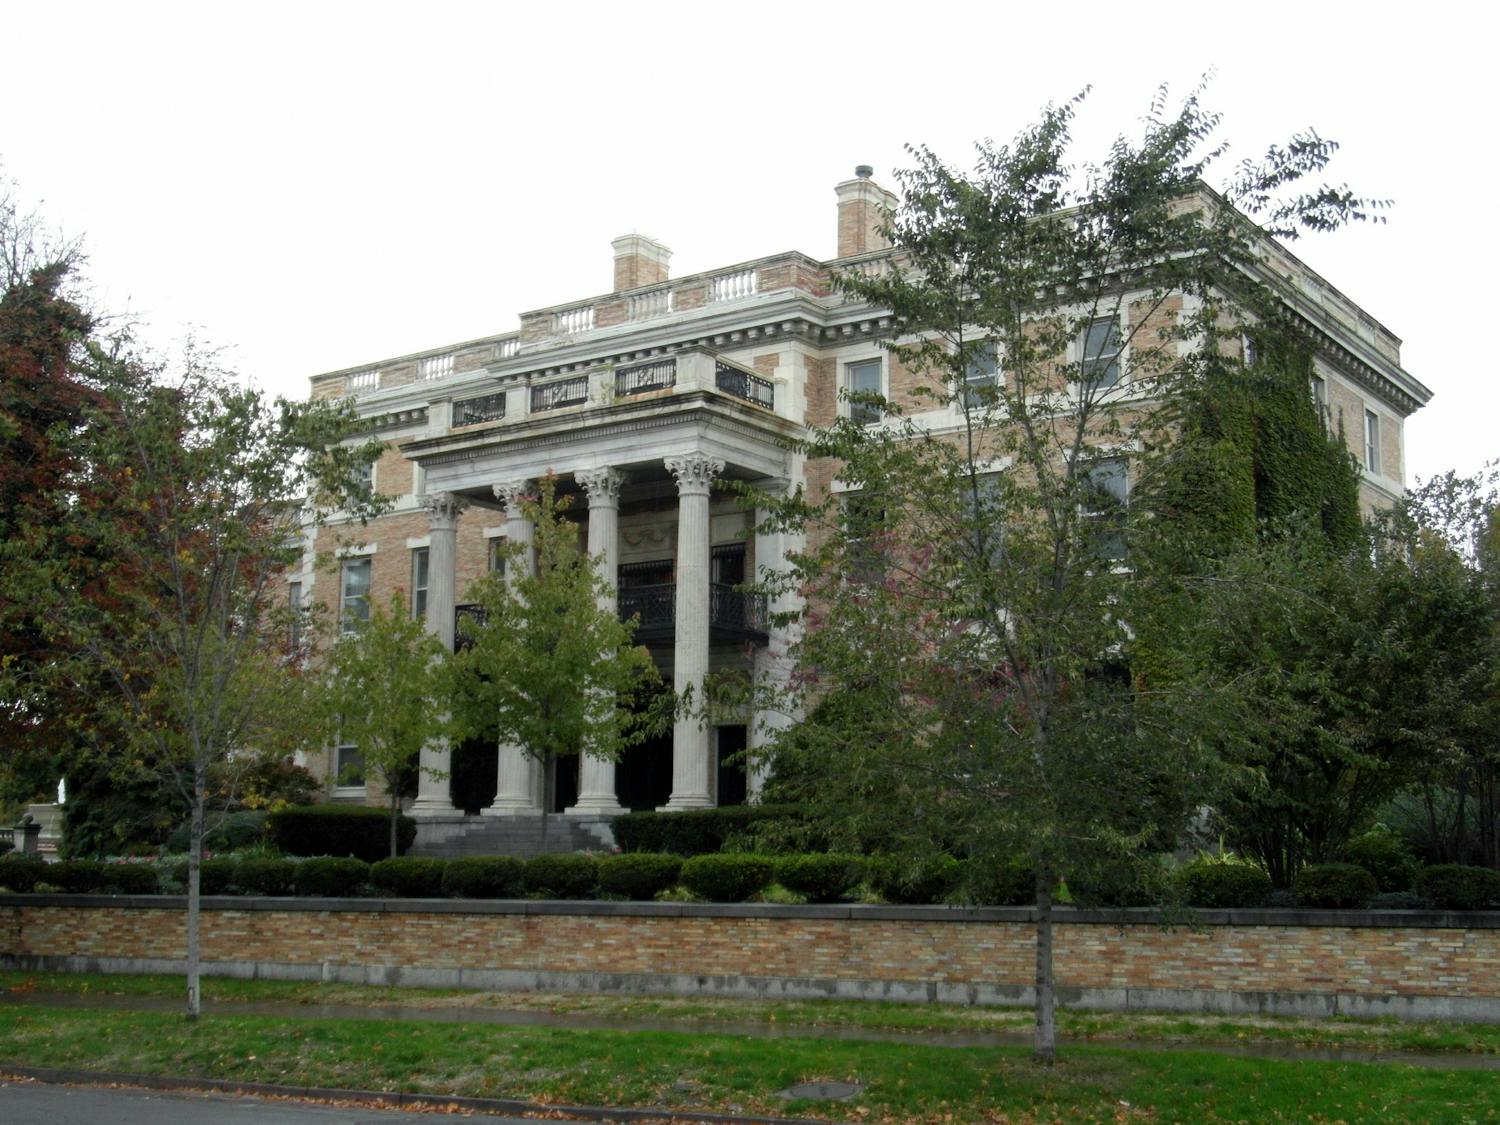 Washington, D.C.-based developer Douglas Jemal purchased the Butler Mansion from The University at Buffalo Foundation for $3.75 million.